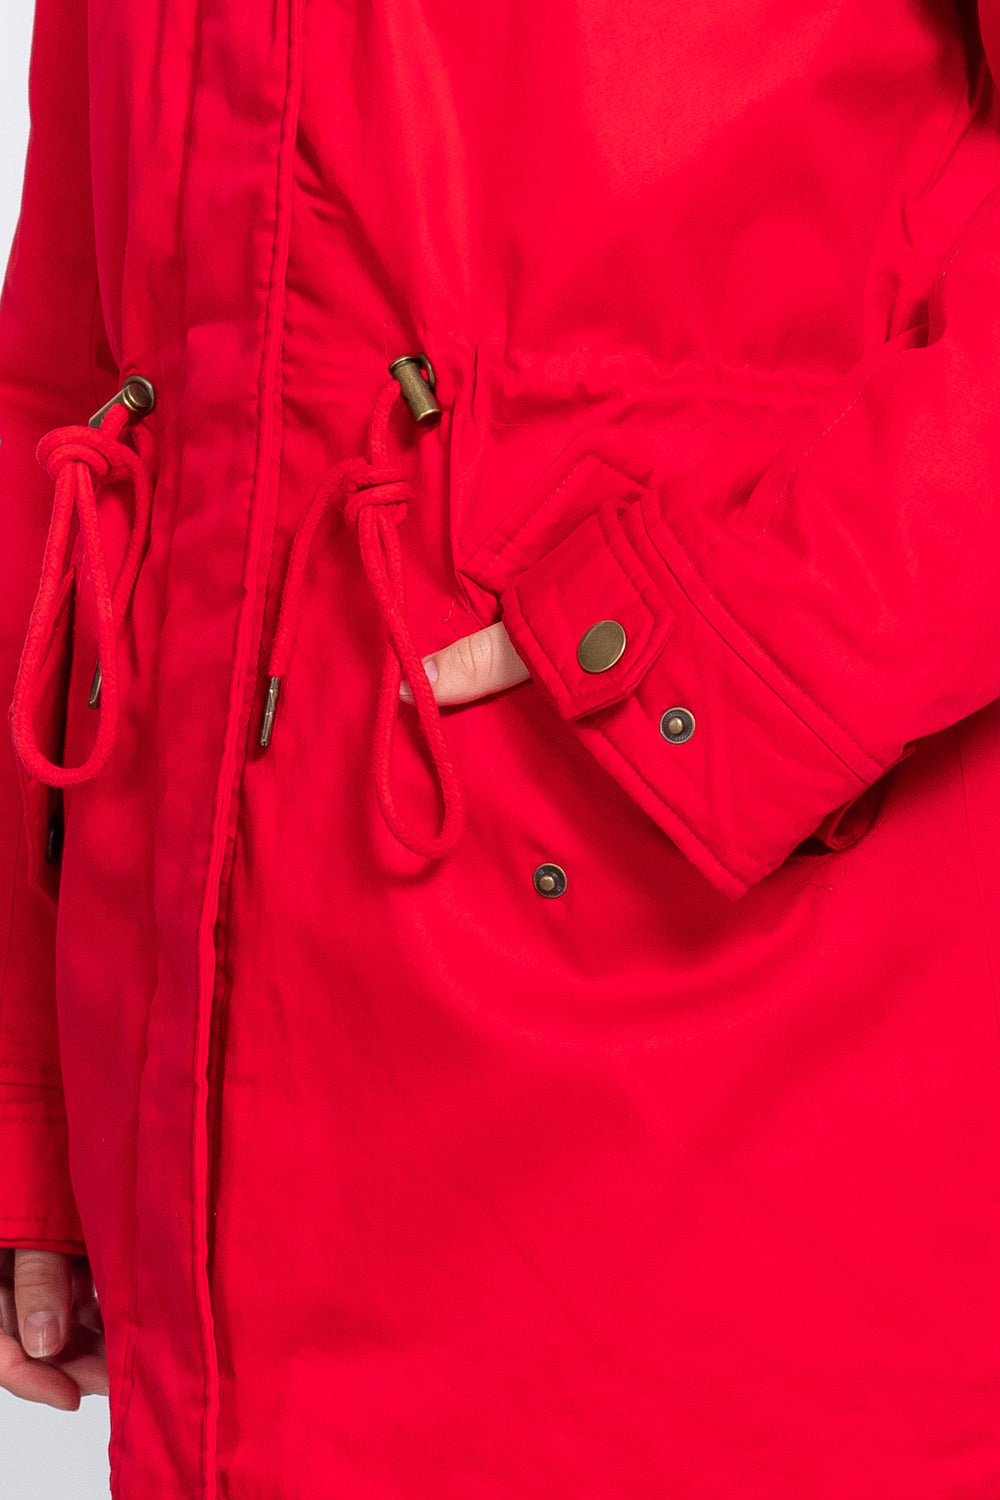 Red Fleece Lined Fur Hoodie Utility Jacket - Tigbuls Variety Fashion